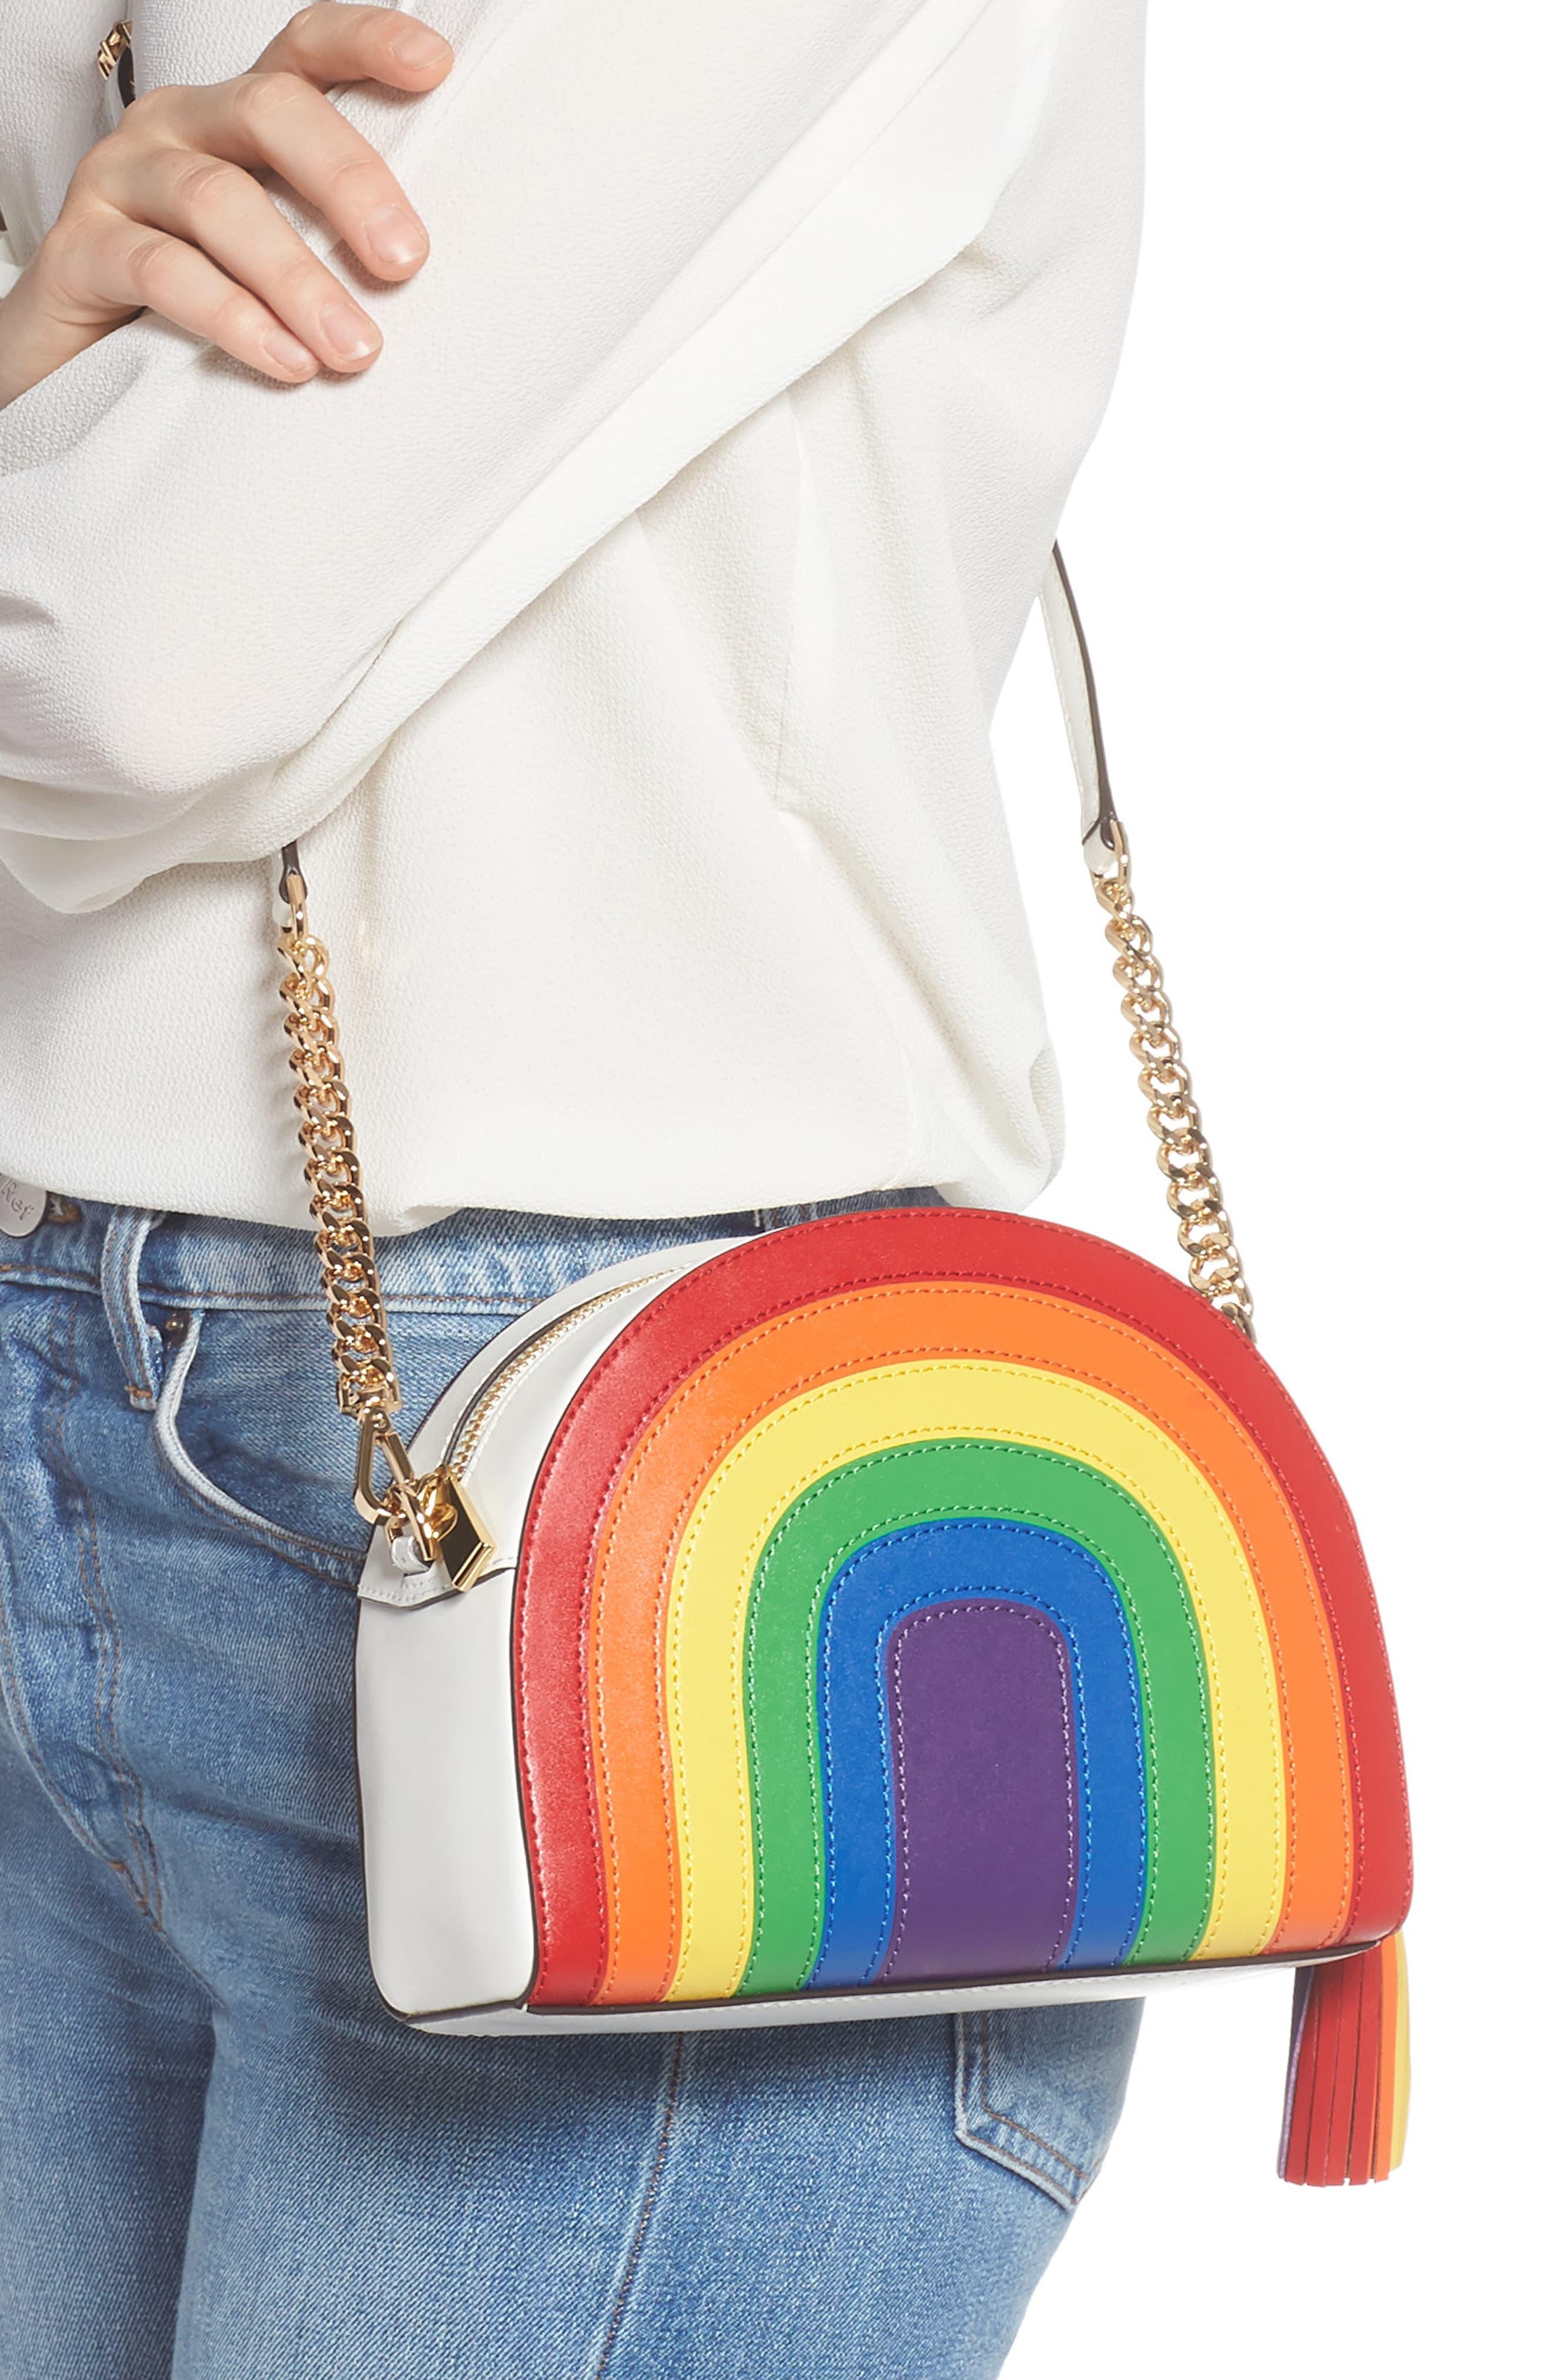 rainbow michael kors purse